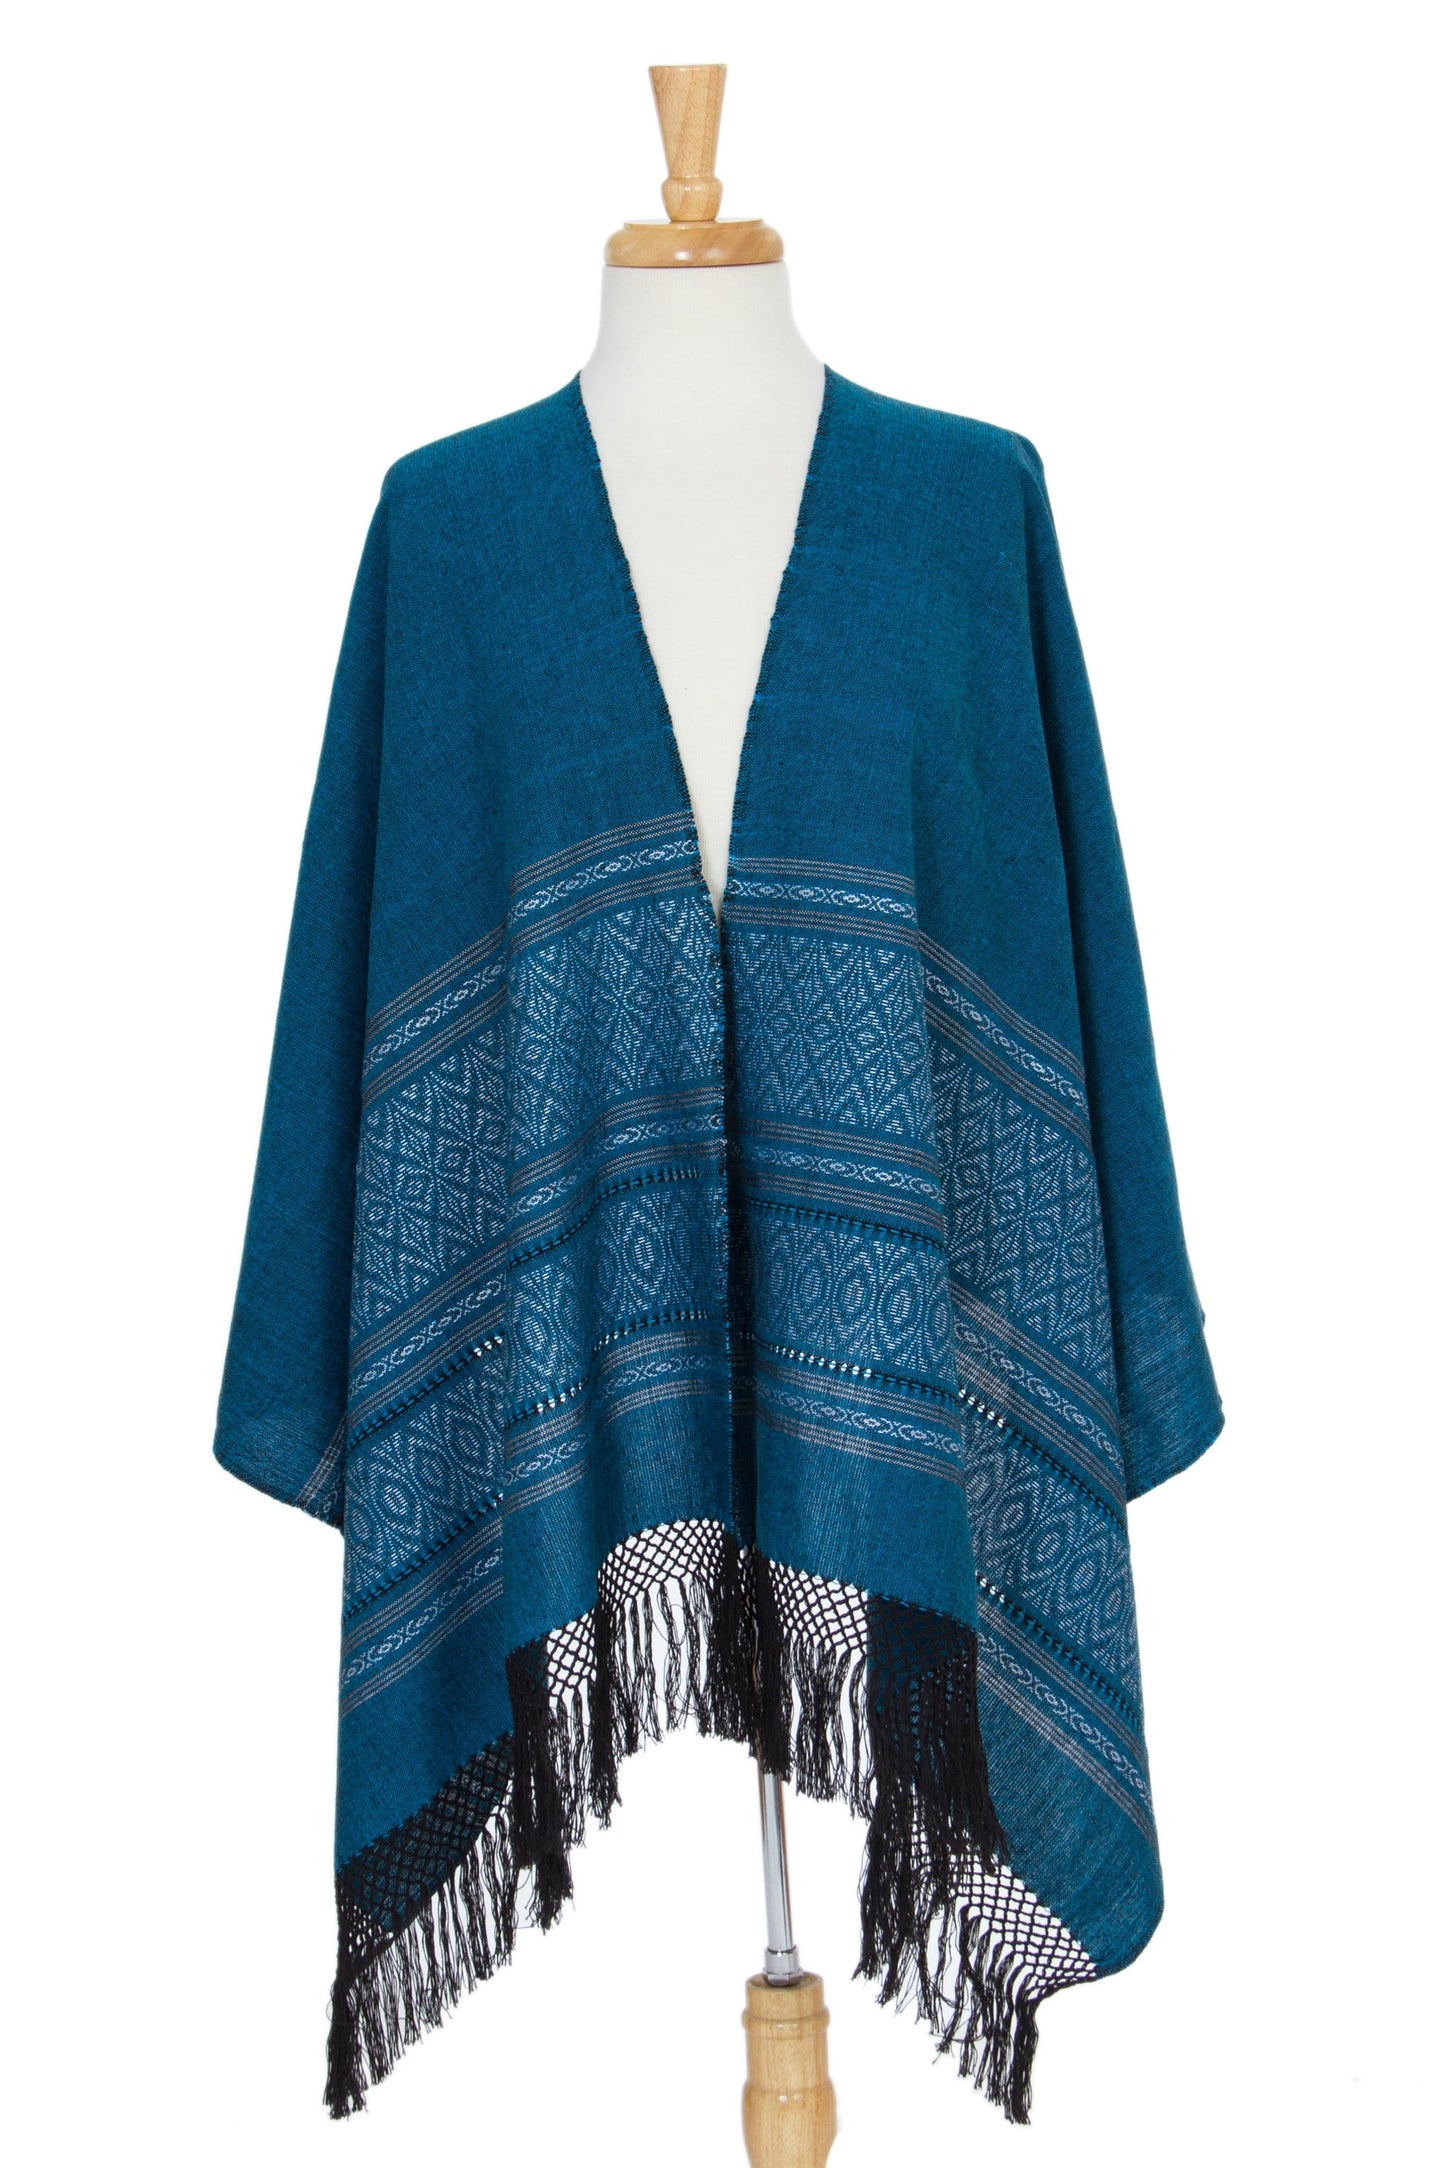 Zapotec cotton rebozo shawl, 'Blue Zapotec Treasures'